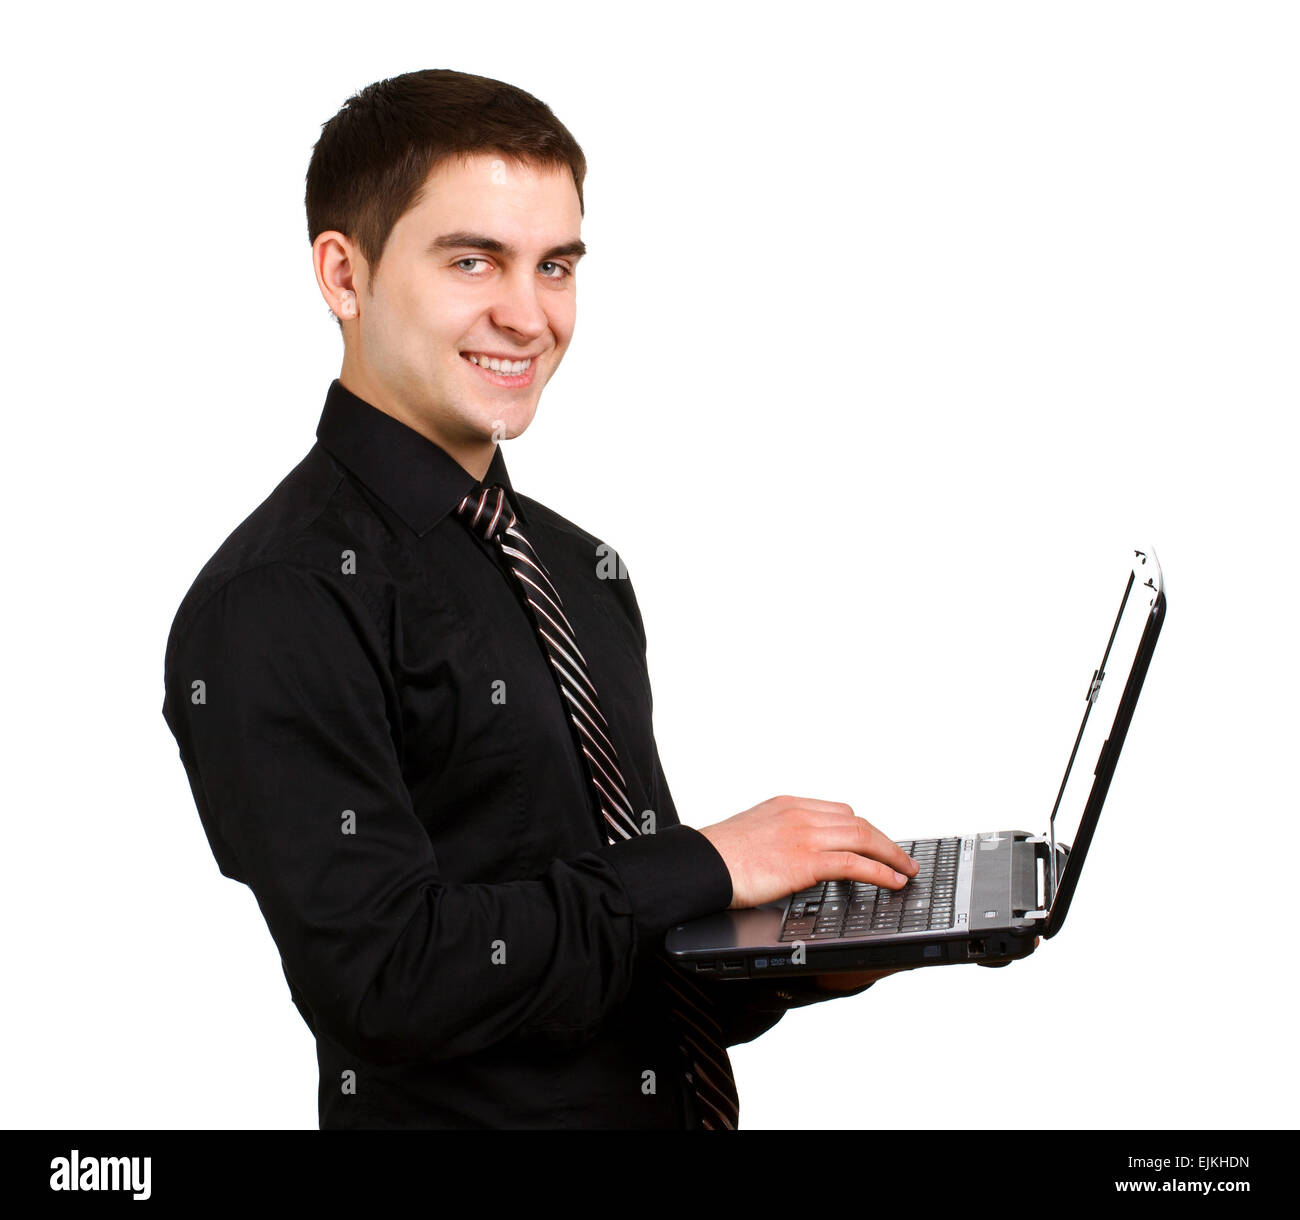 man with laptop Stock Photo